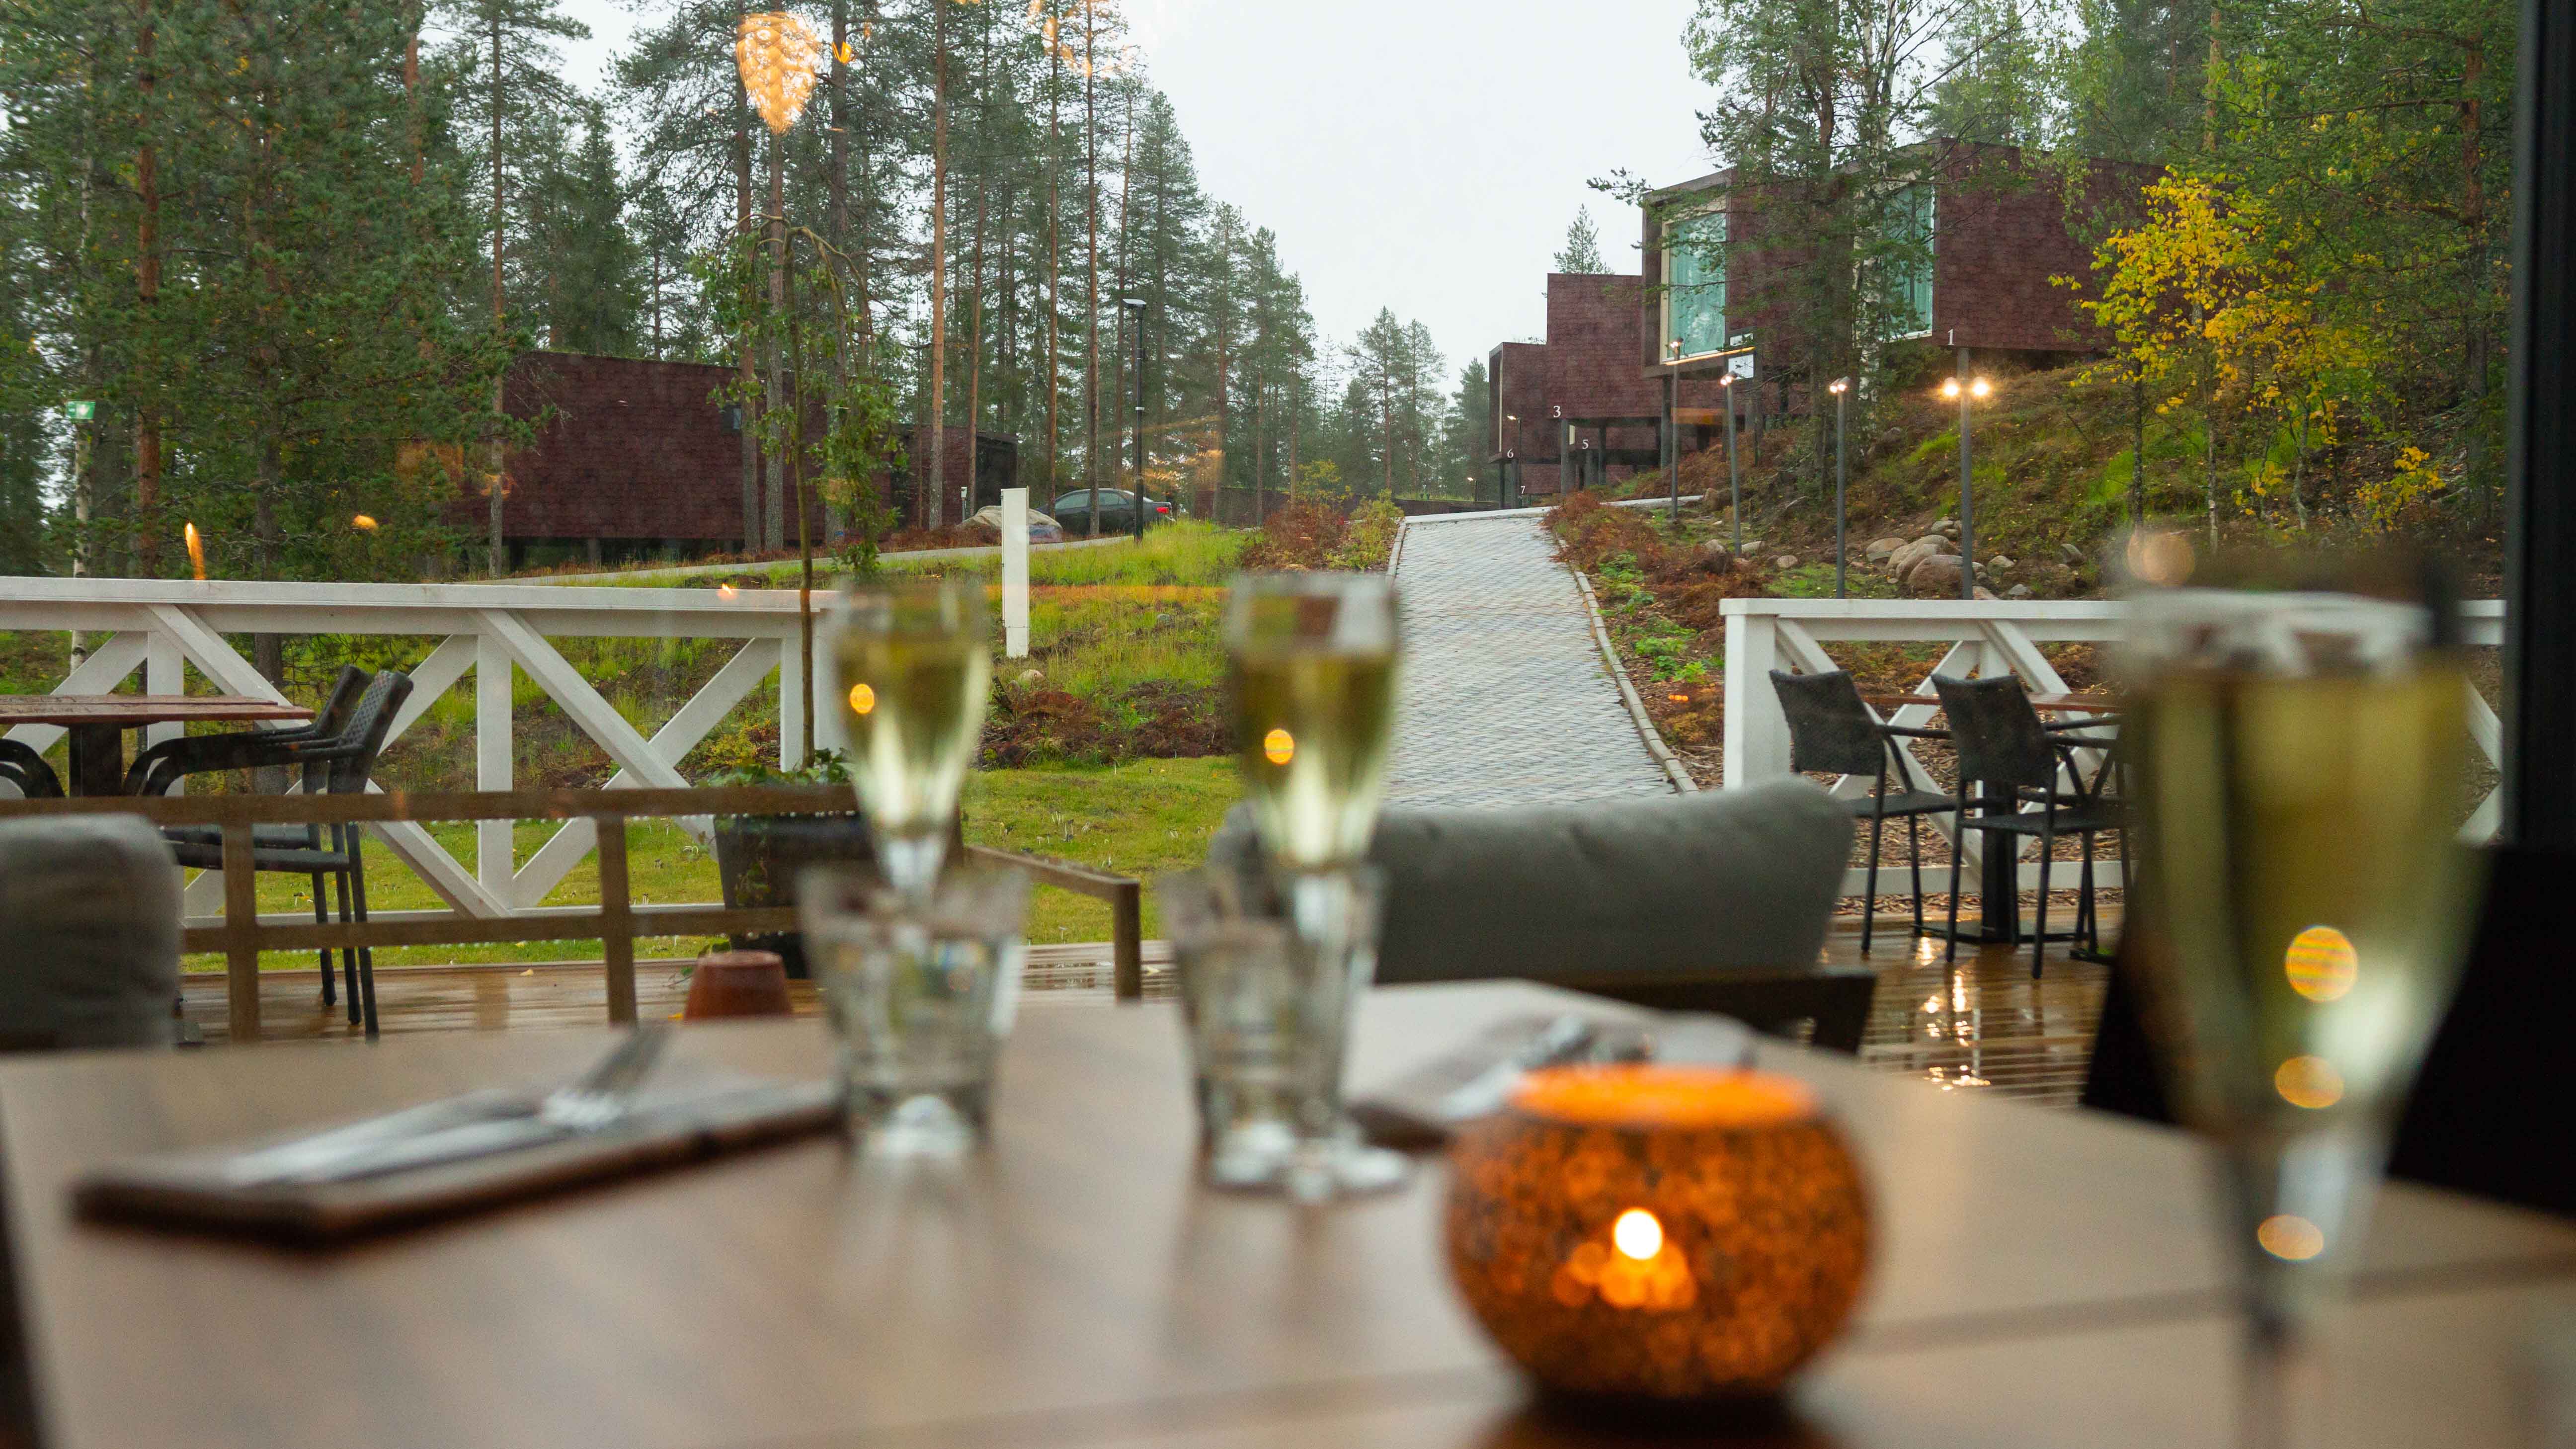 Arctic TreeHouse Hotel surroundings in autumn.